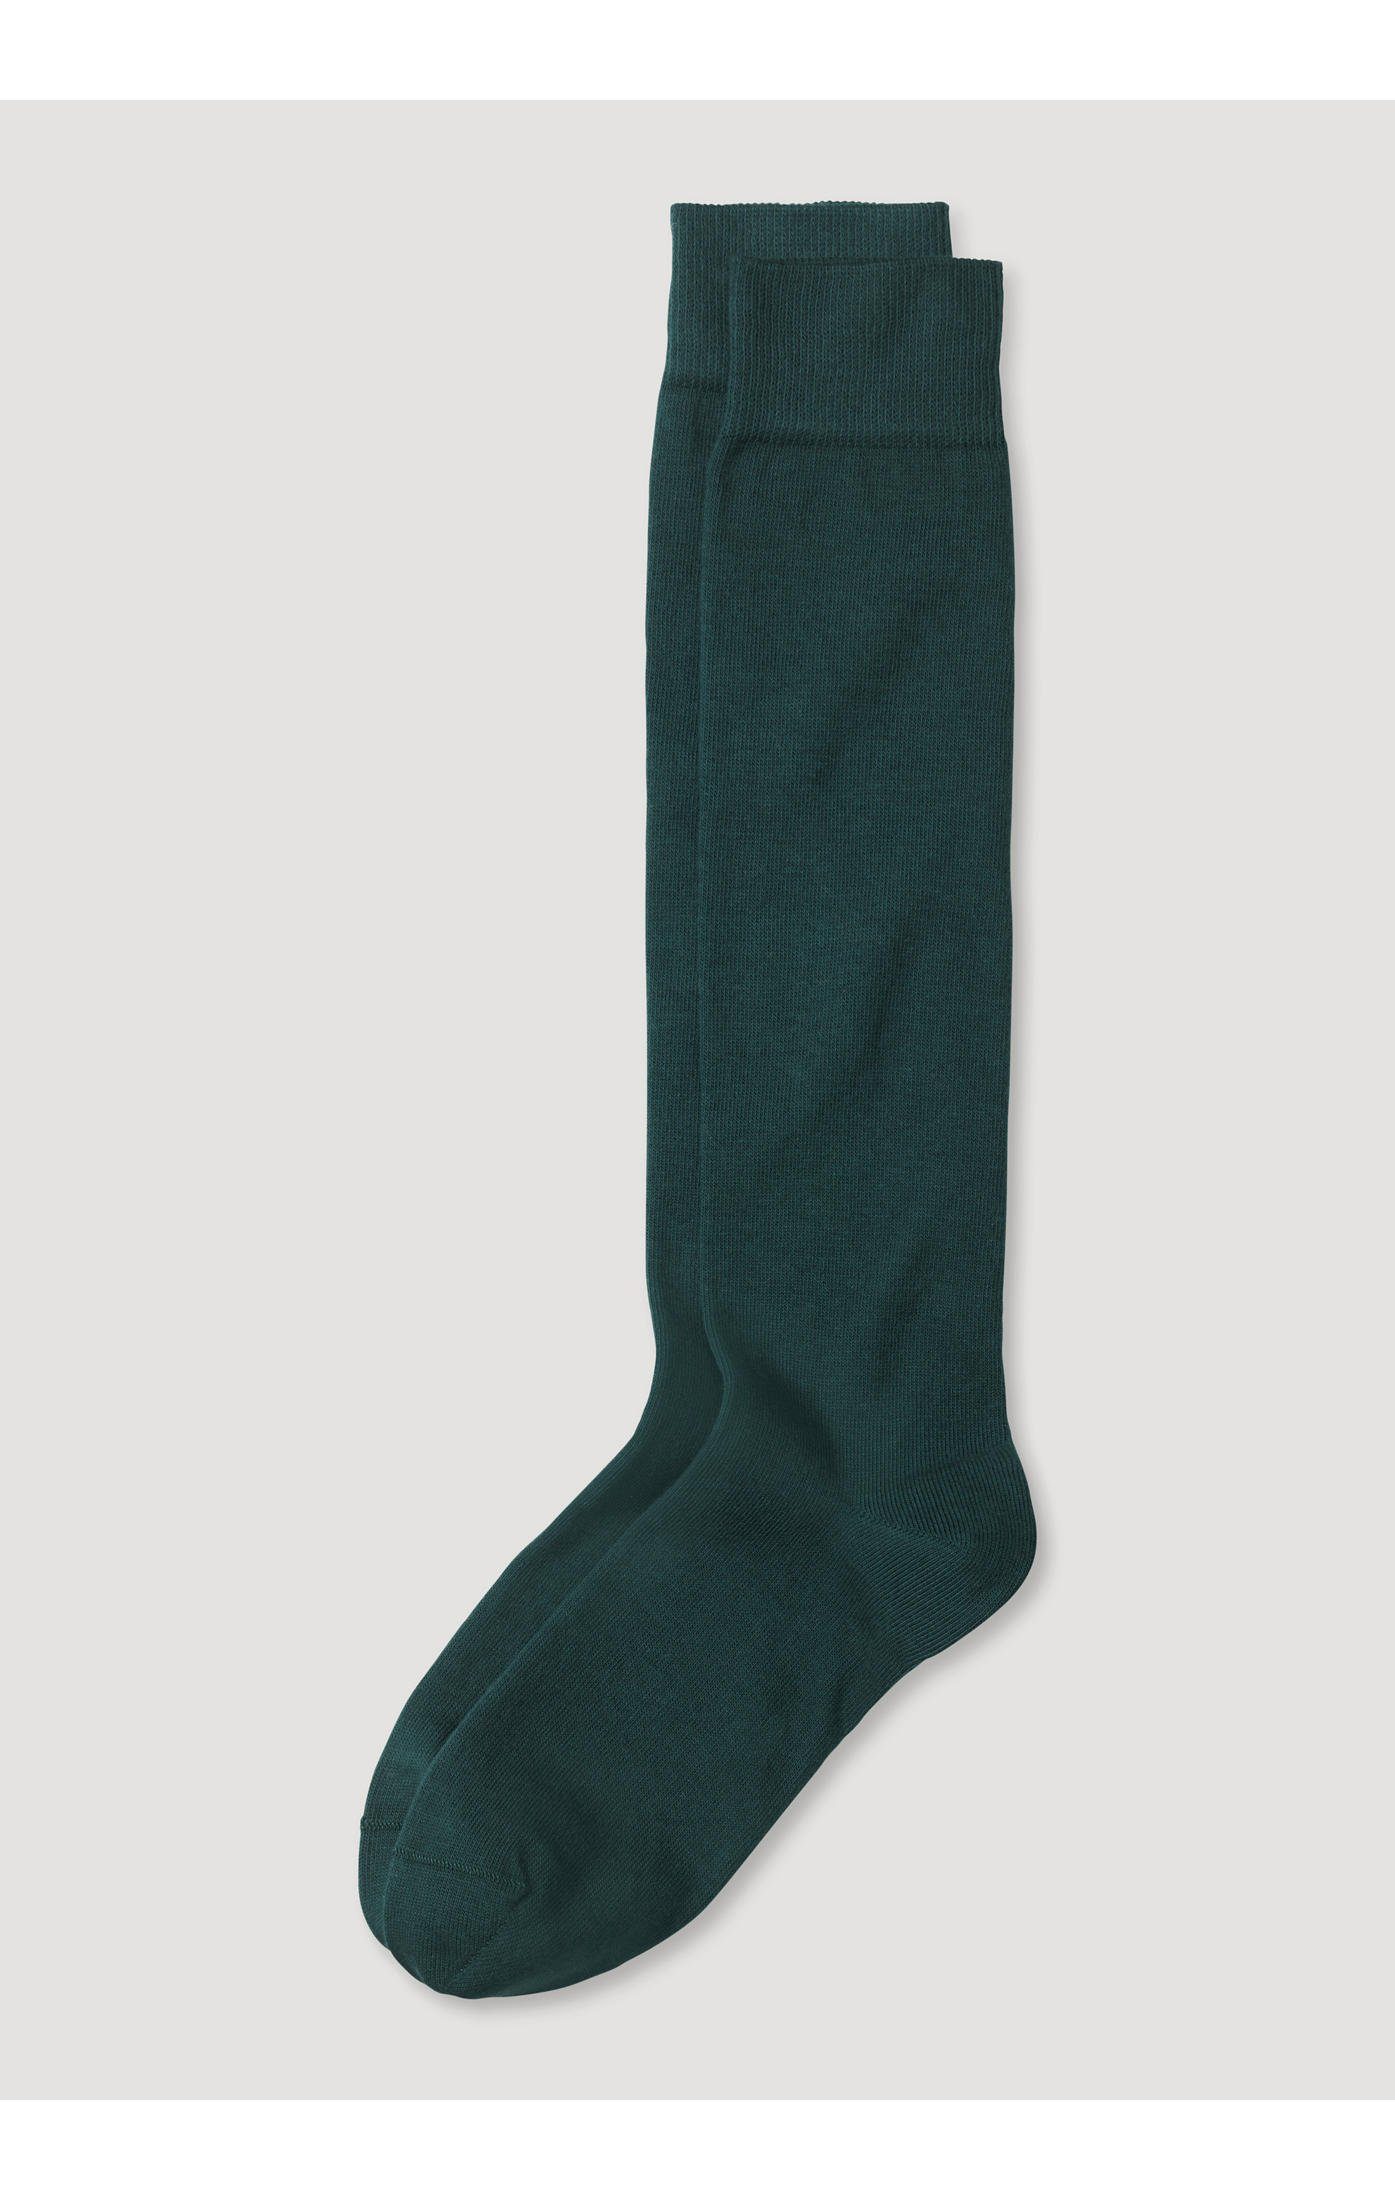 Hessnatur aus Socken Bio-Baumwolle dunkelgrün (1-Paar)